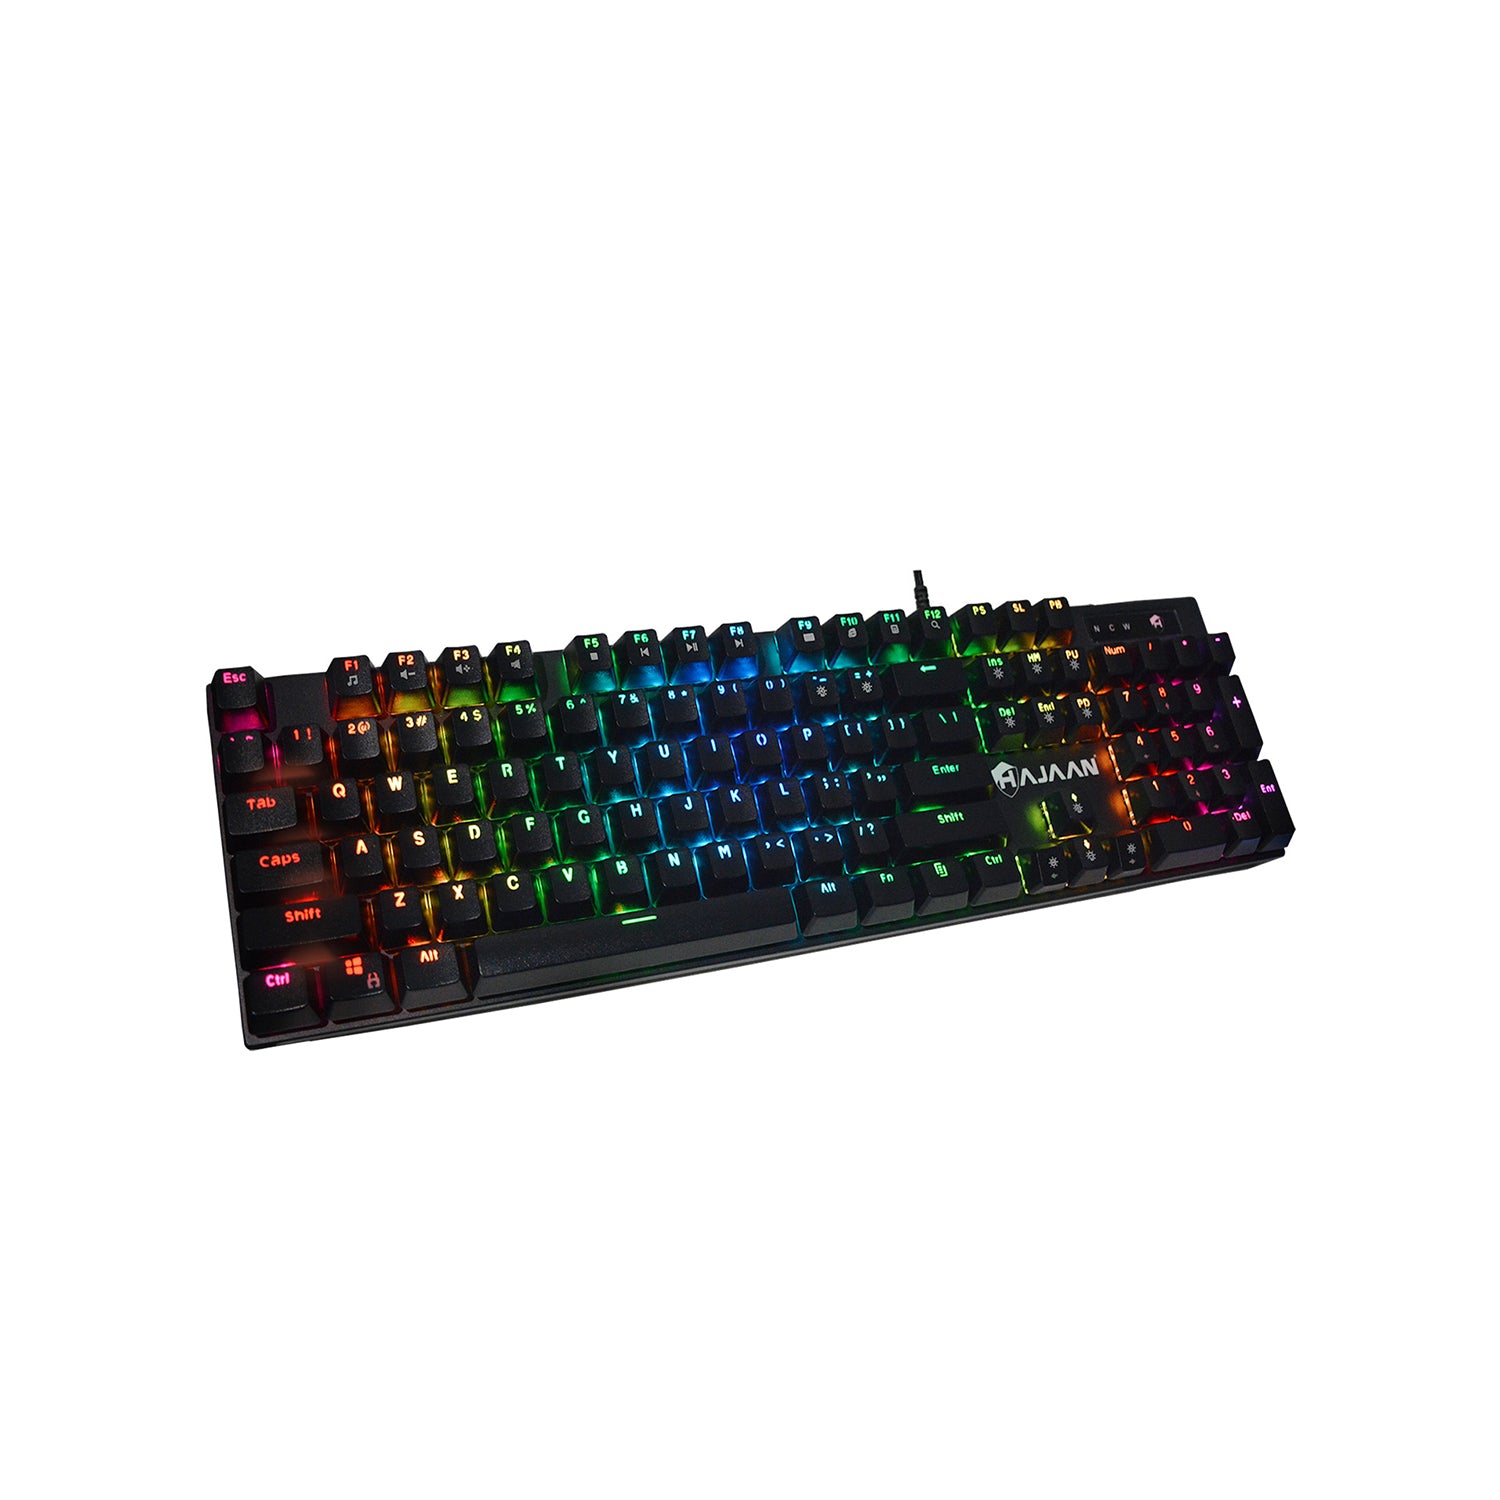 HAJAAN HK620-GM Mechanical Gaming Keyboard RGB Backlit USB Wired Keyboard with Blue Switches, Full Anti-Ghosting 104 Keys, for Desktop PC -Black